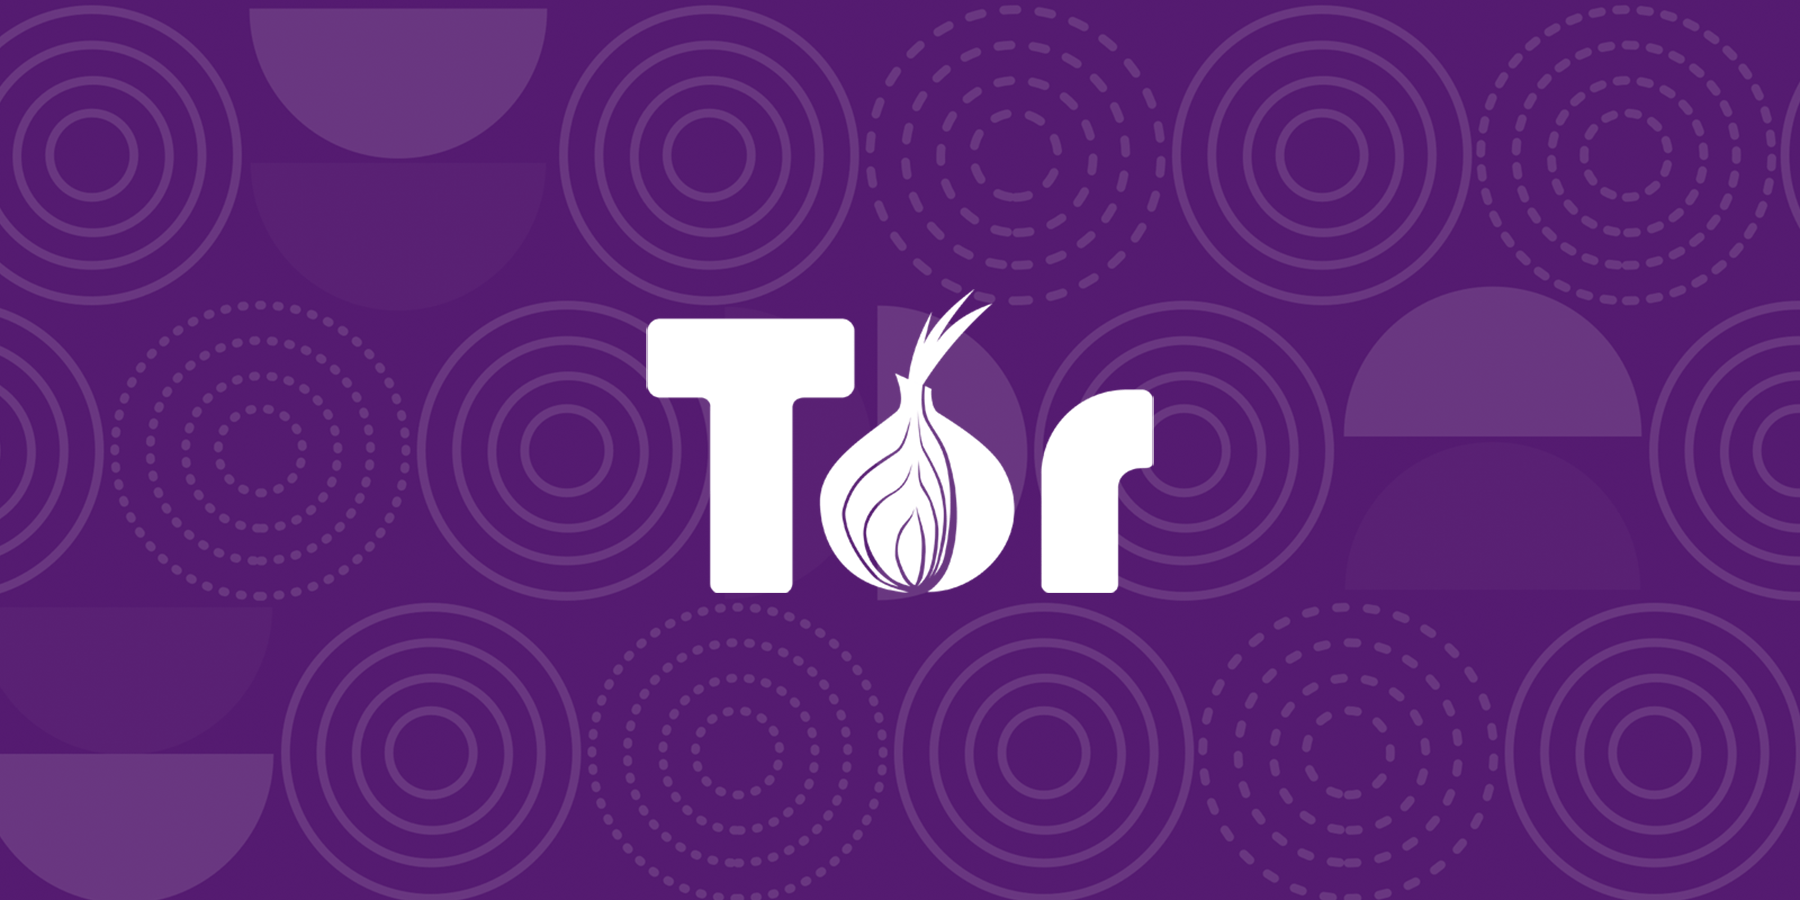 Discover the Hidden World of Tor Dark Web and Reddit's Darknet Markets